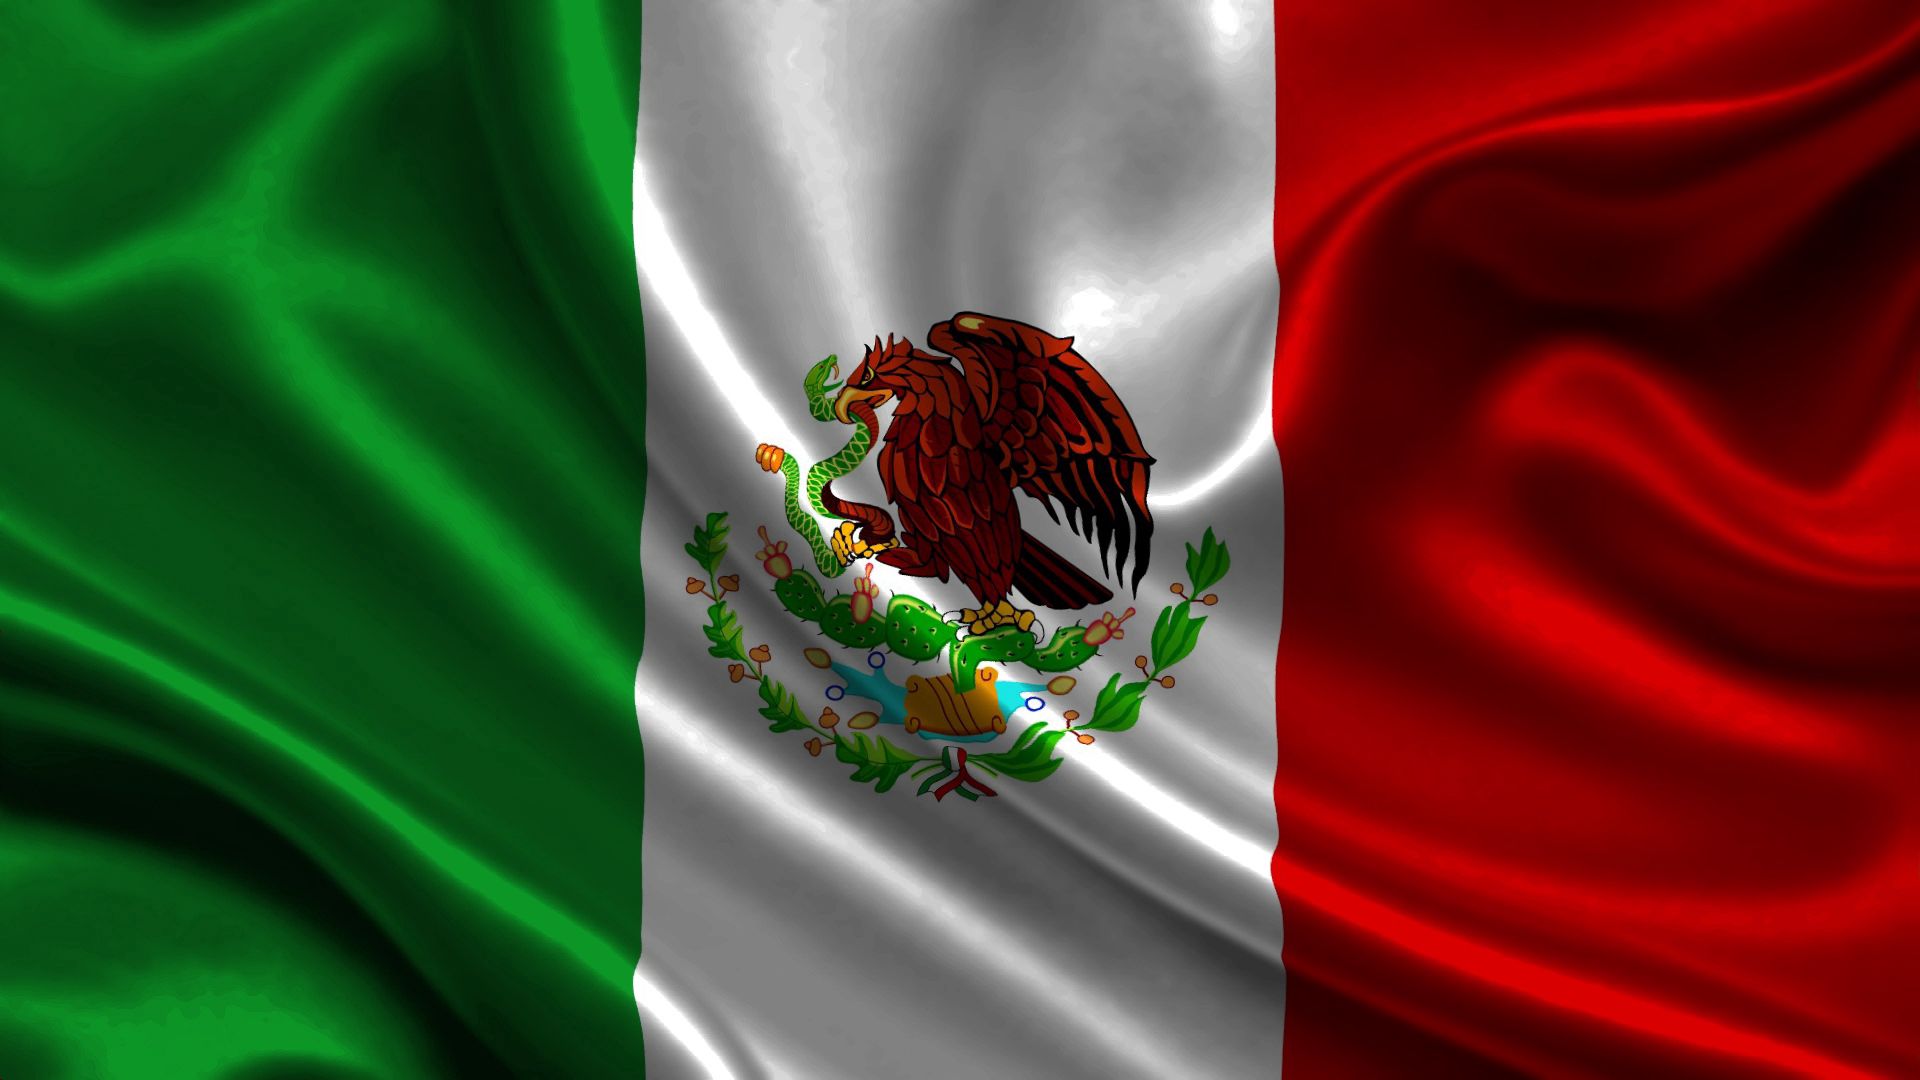 miscellanea, miscellaneous, flag, atlas, symbolism, coat of arms, mexico